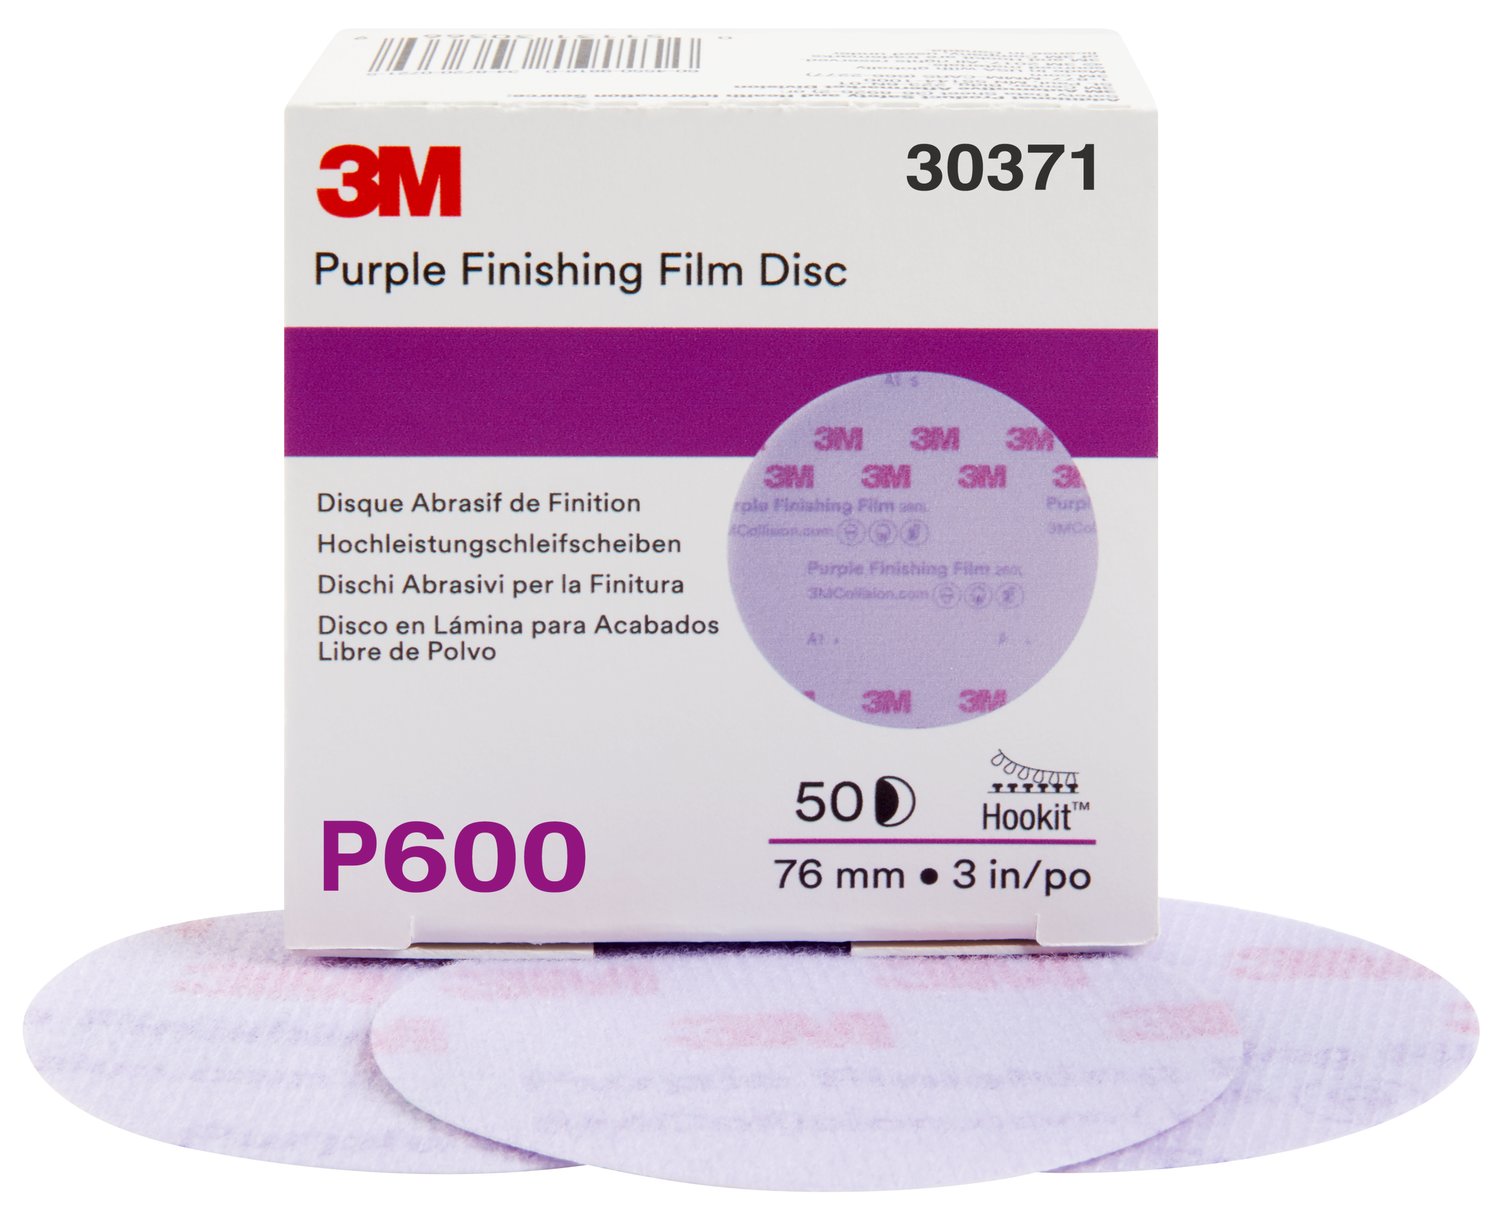 7100122790 - 3M Hookit Purple Finishing Film Abrasive Disc 260L, 30371, 3 in, P600,
50 discs per carton, 4 cartons per case